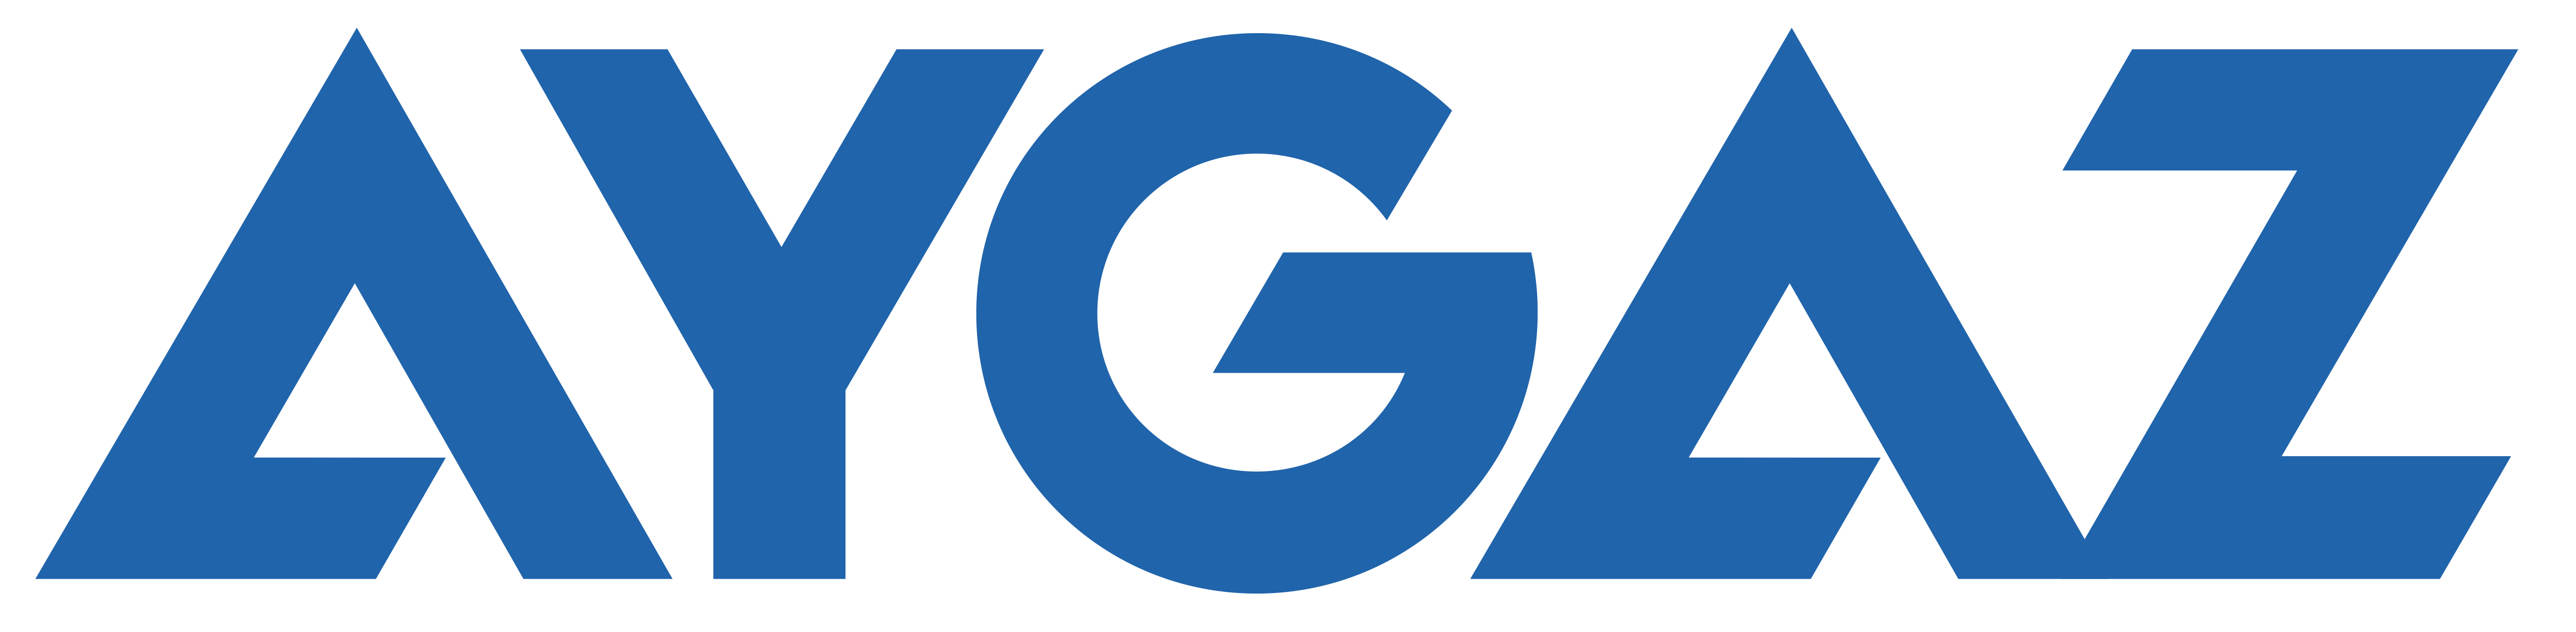 Aygaz Brand Logo